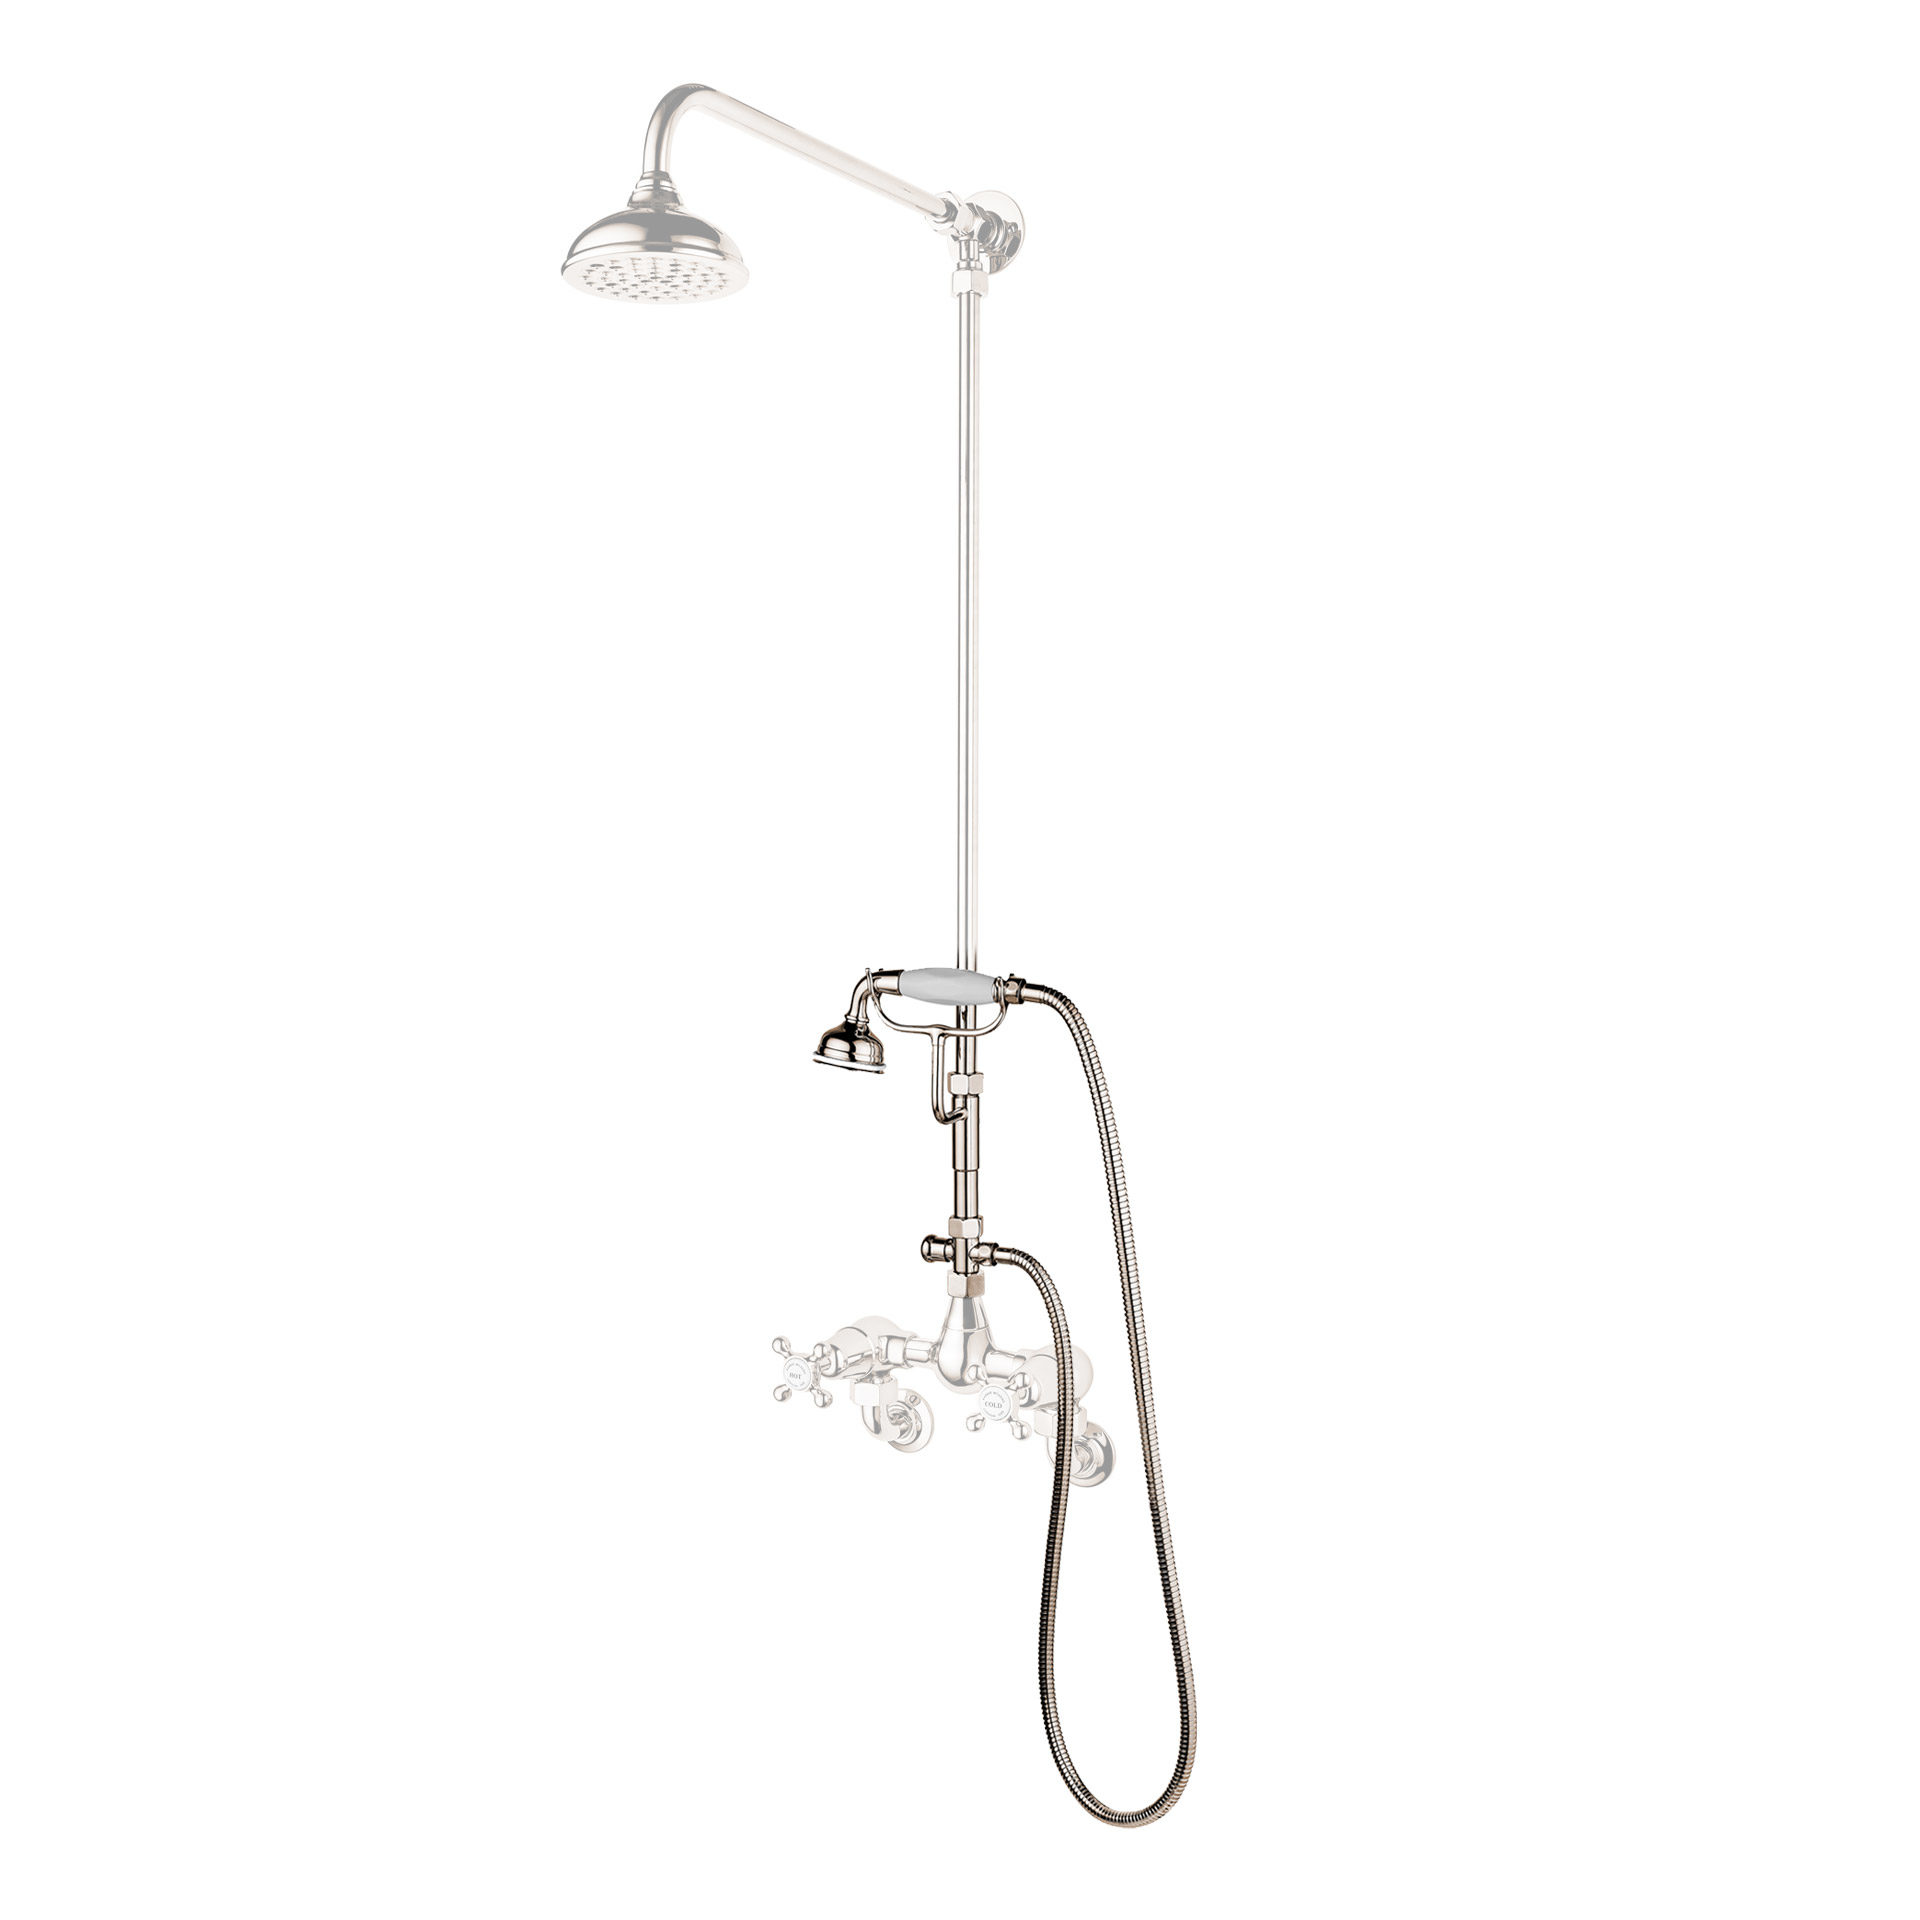 Bespoke shower set up showing different tap and diverter options